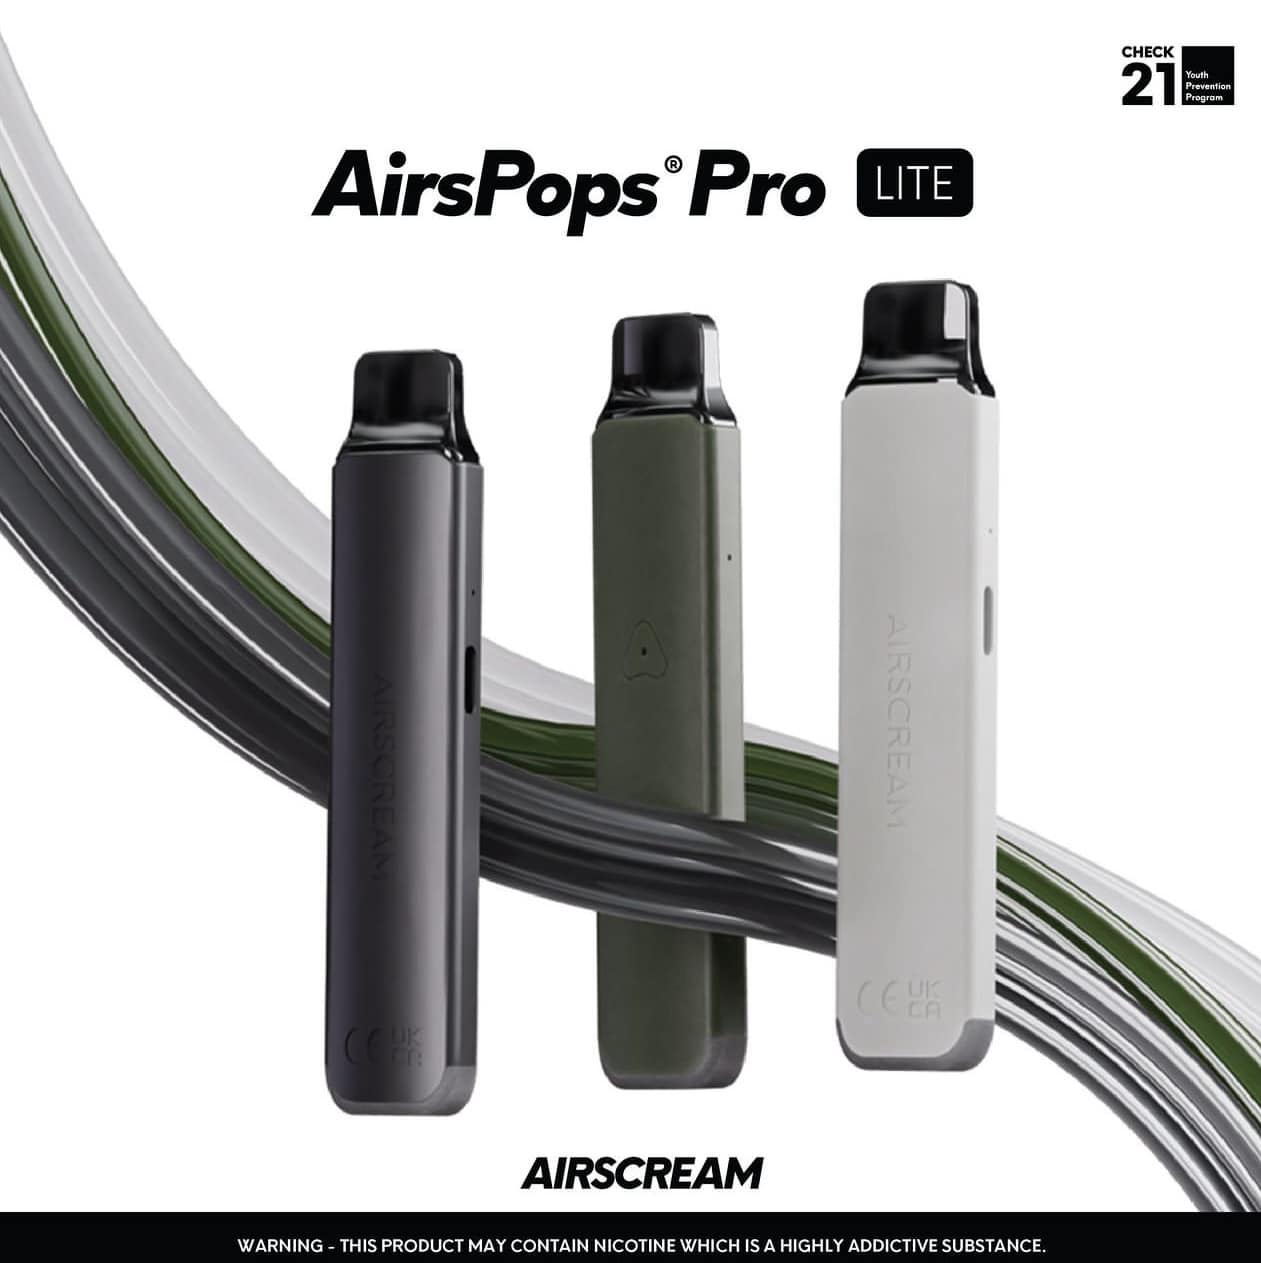 AirScream AirsPops Pro Lite Pod Kit